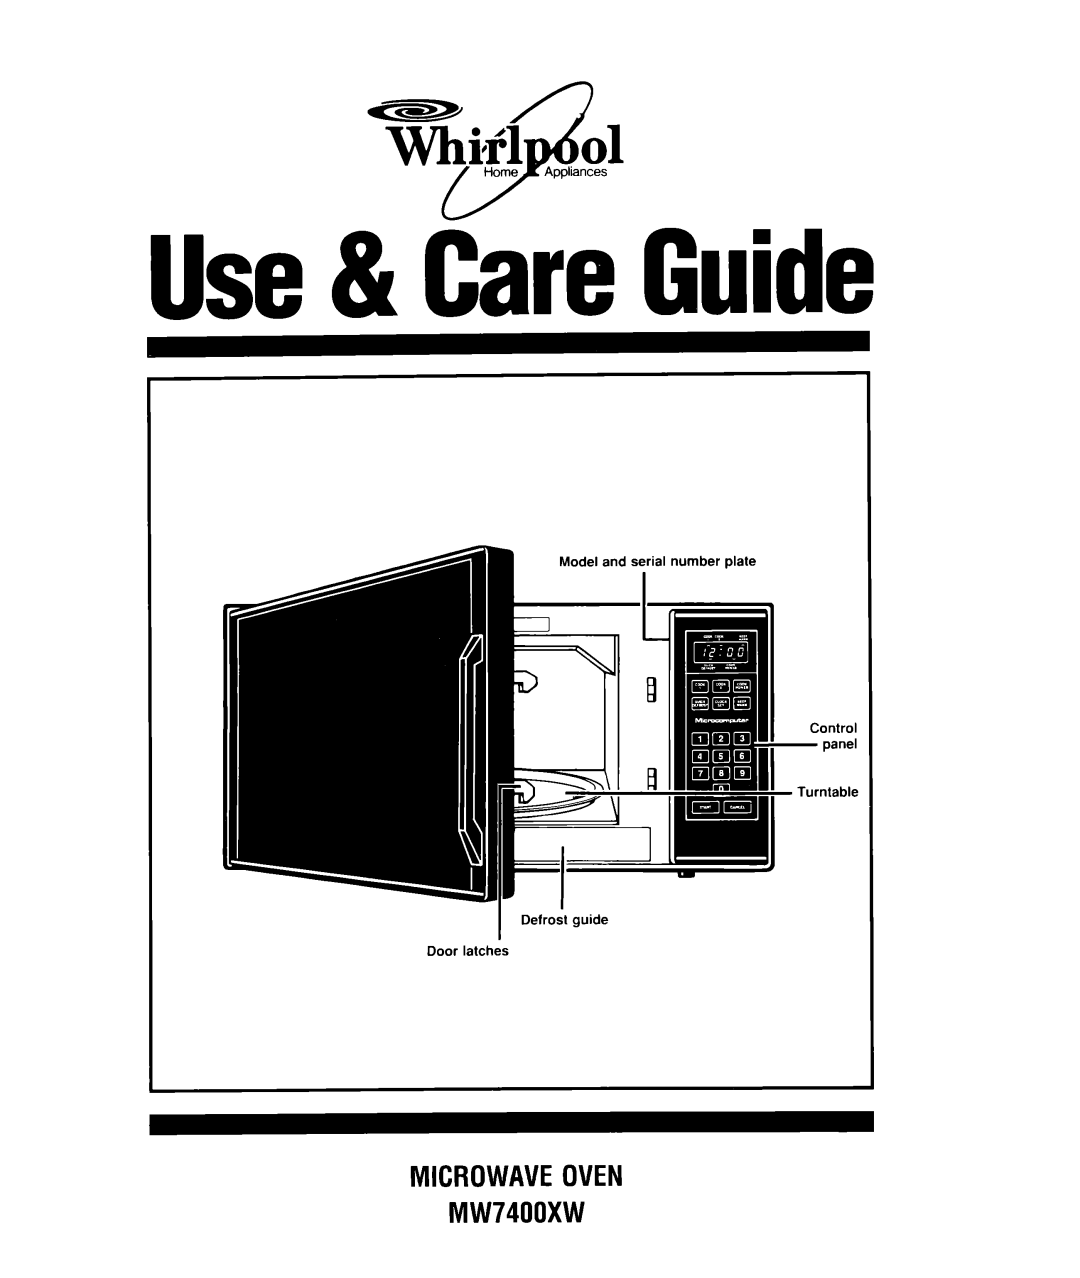 Whirlpool manual MICROWAVEOVEN MW7400XW, Use& CareGuide 